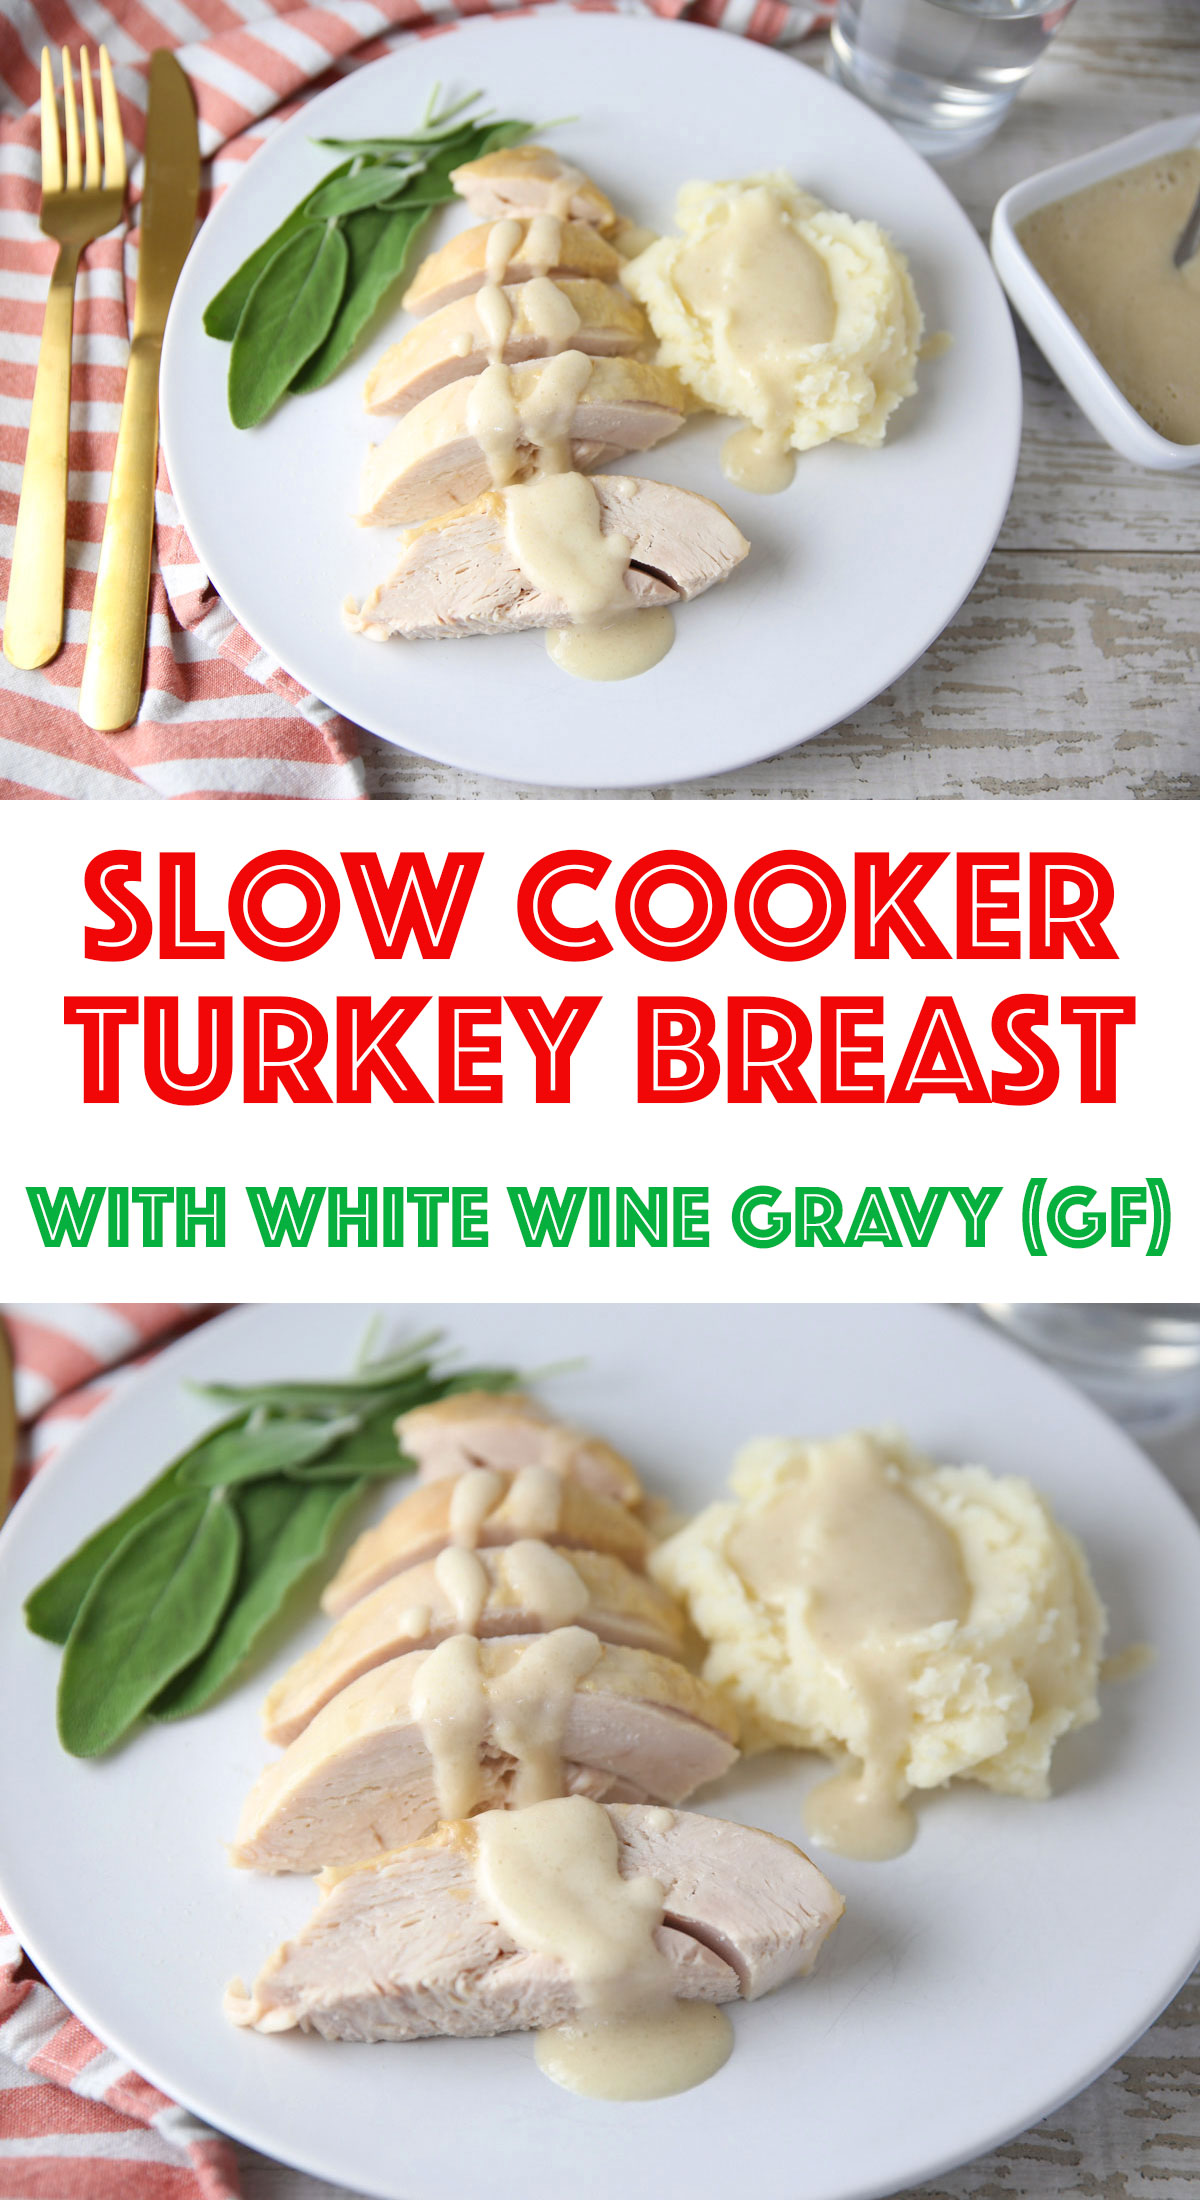 Slow Cooker Turkey Breast with White Wine Gravy